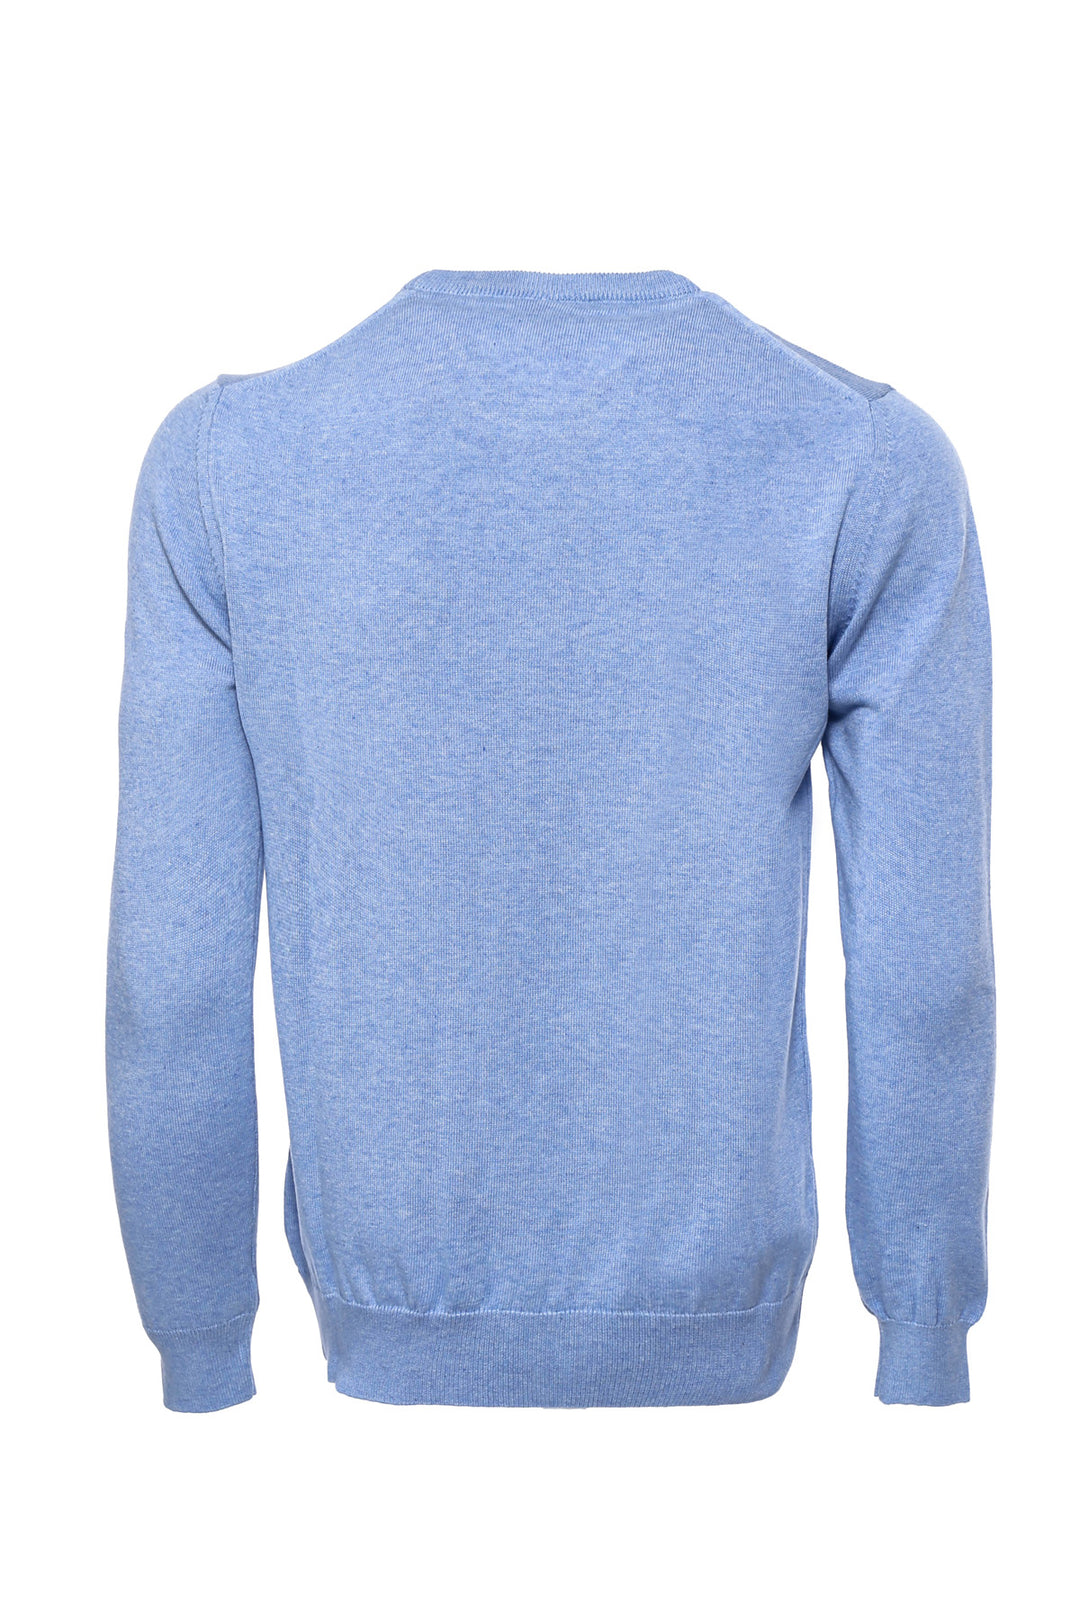 Blue Crew Neck Sweater - Wessi